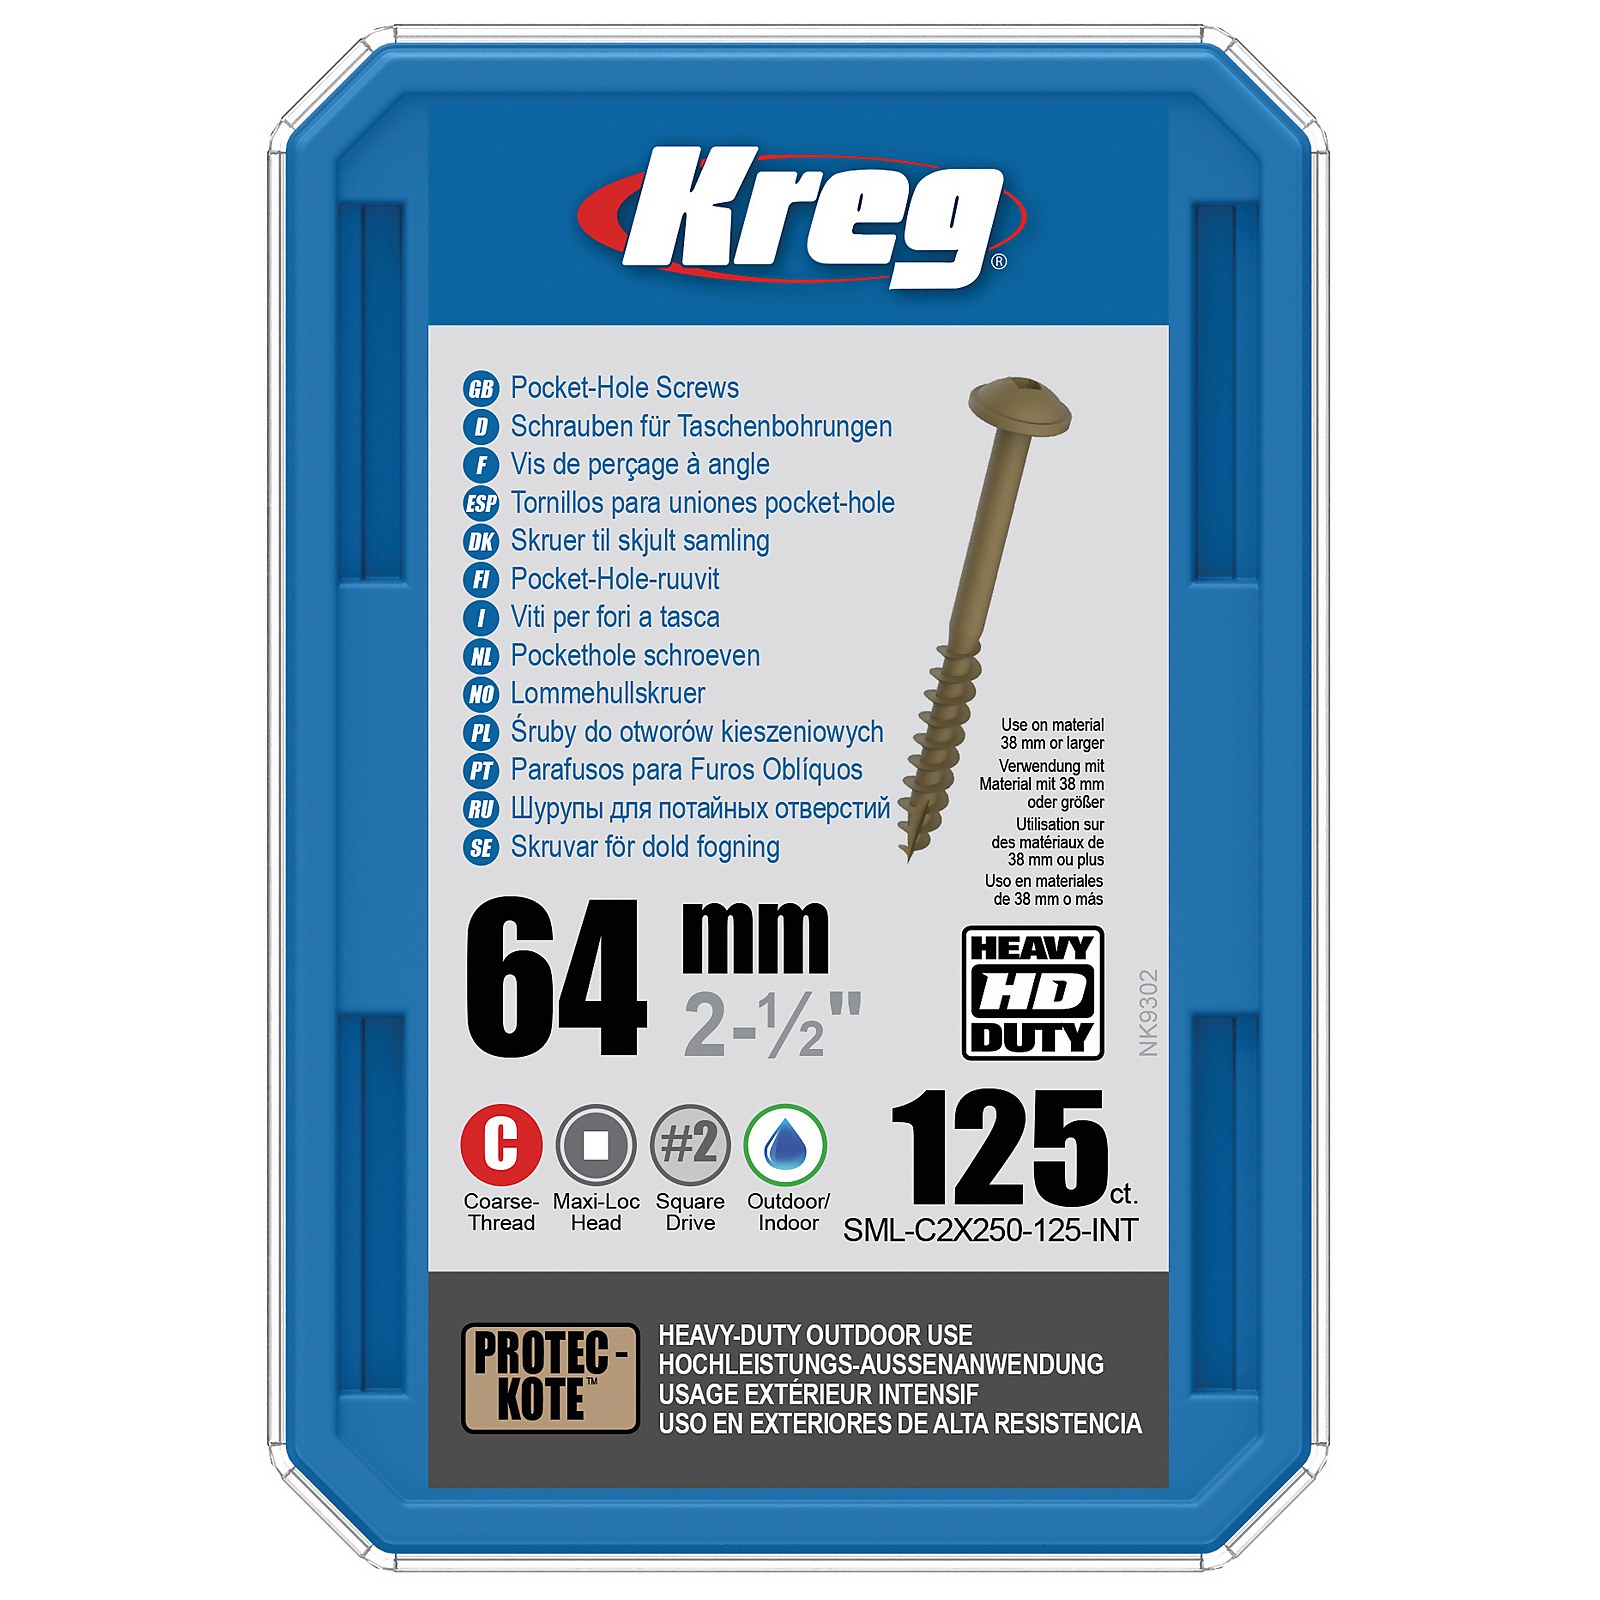 Photo of Kreg Sml-c2x250-125-eur Hd Protec-kote Pocket-hole Screws - 64mm / 2.50 - #14 Coarse-thread- Maxi-loc - 125 Pack